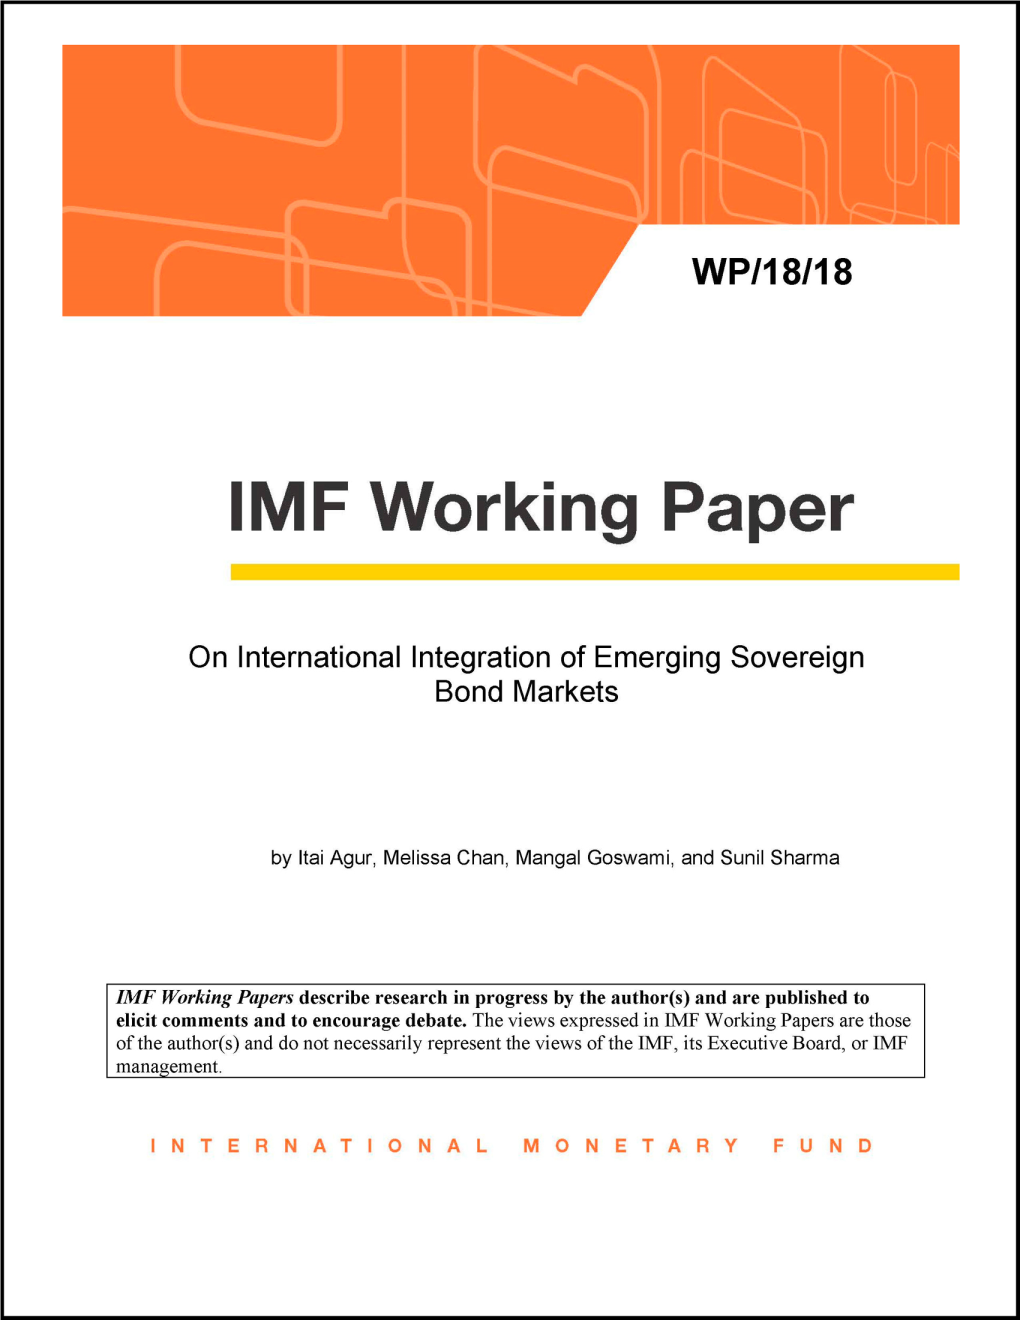 On International Integration of Emerging Sovereign Bond Markets